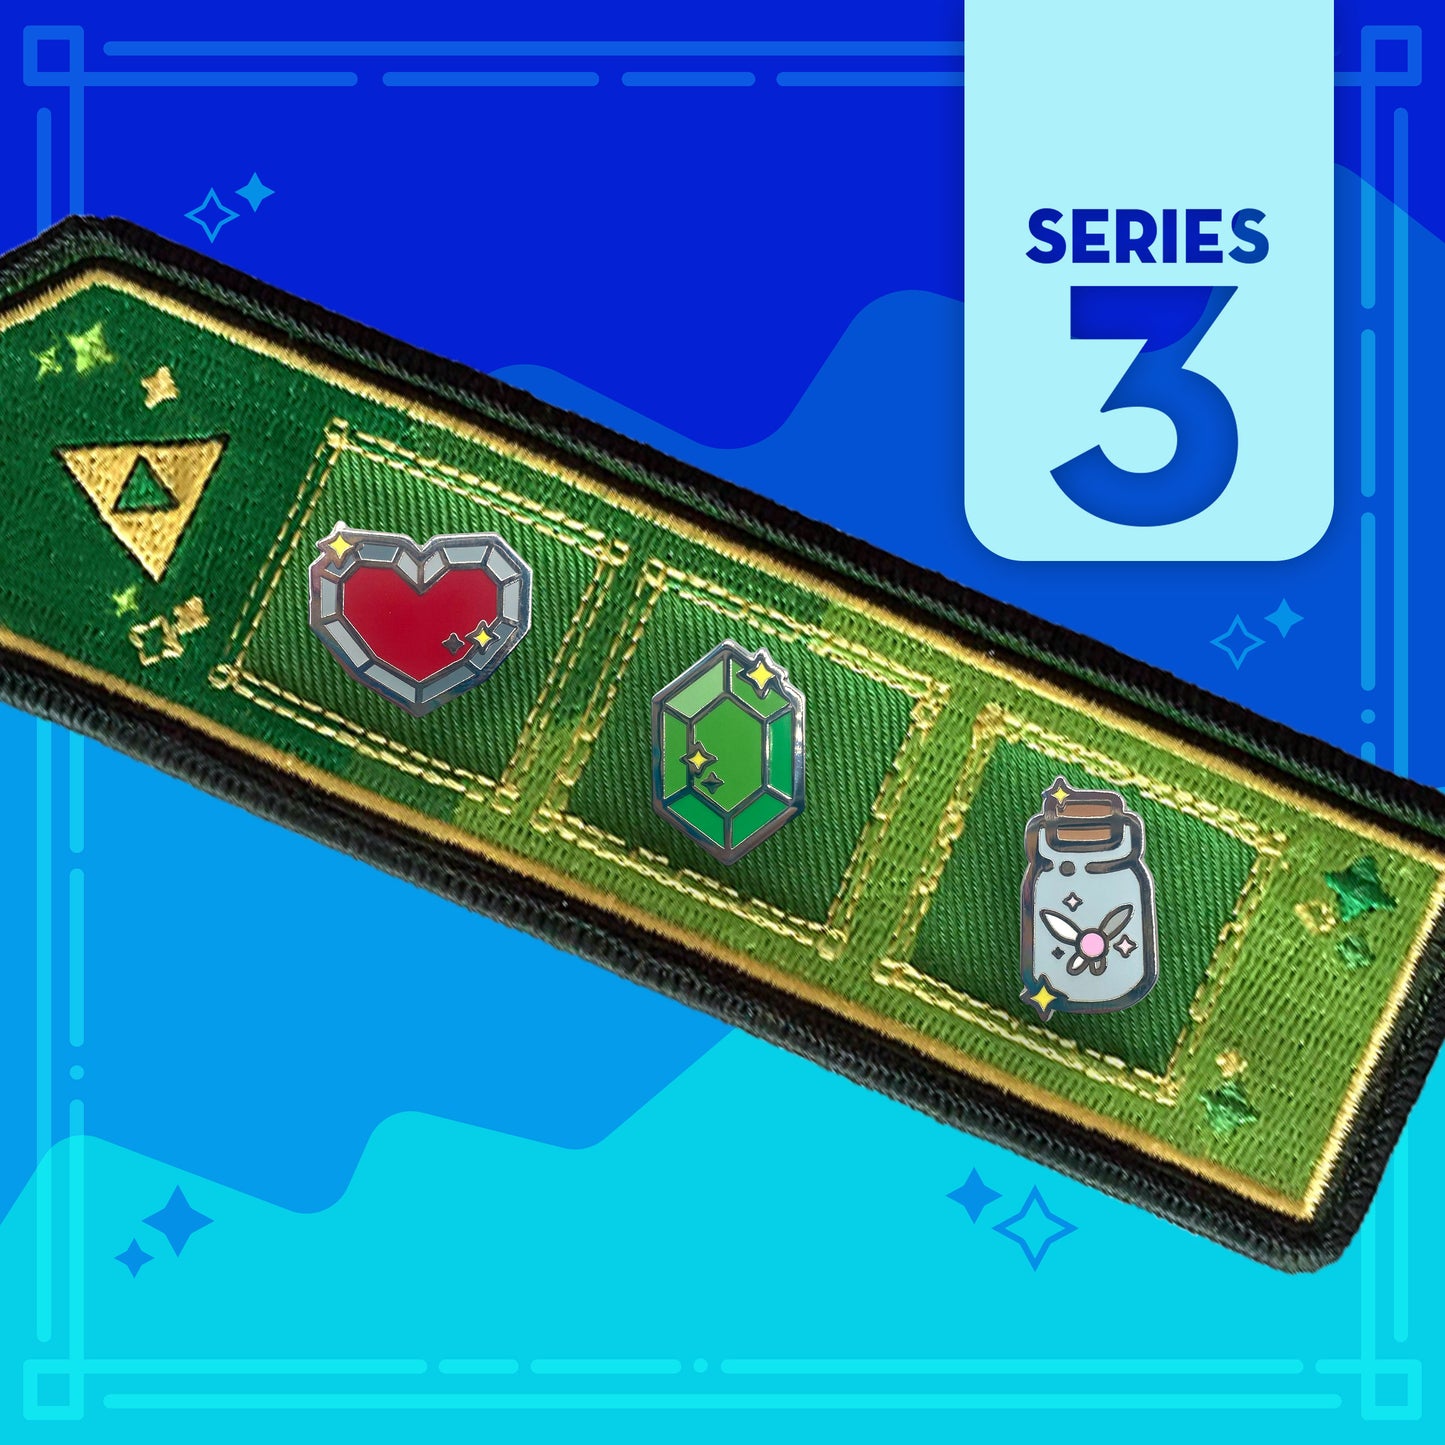 Legend Of Zelda Item Key Chain and Enamel Pins Series 3